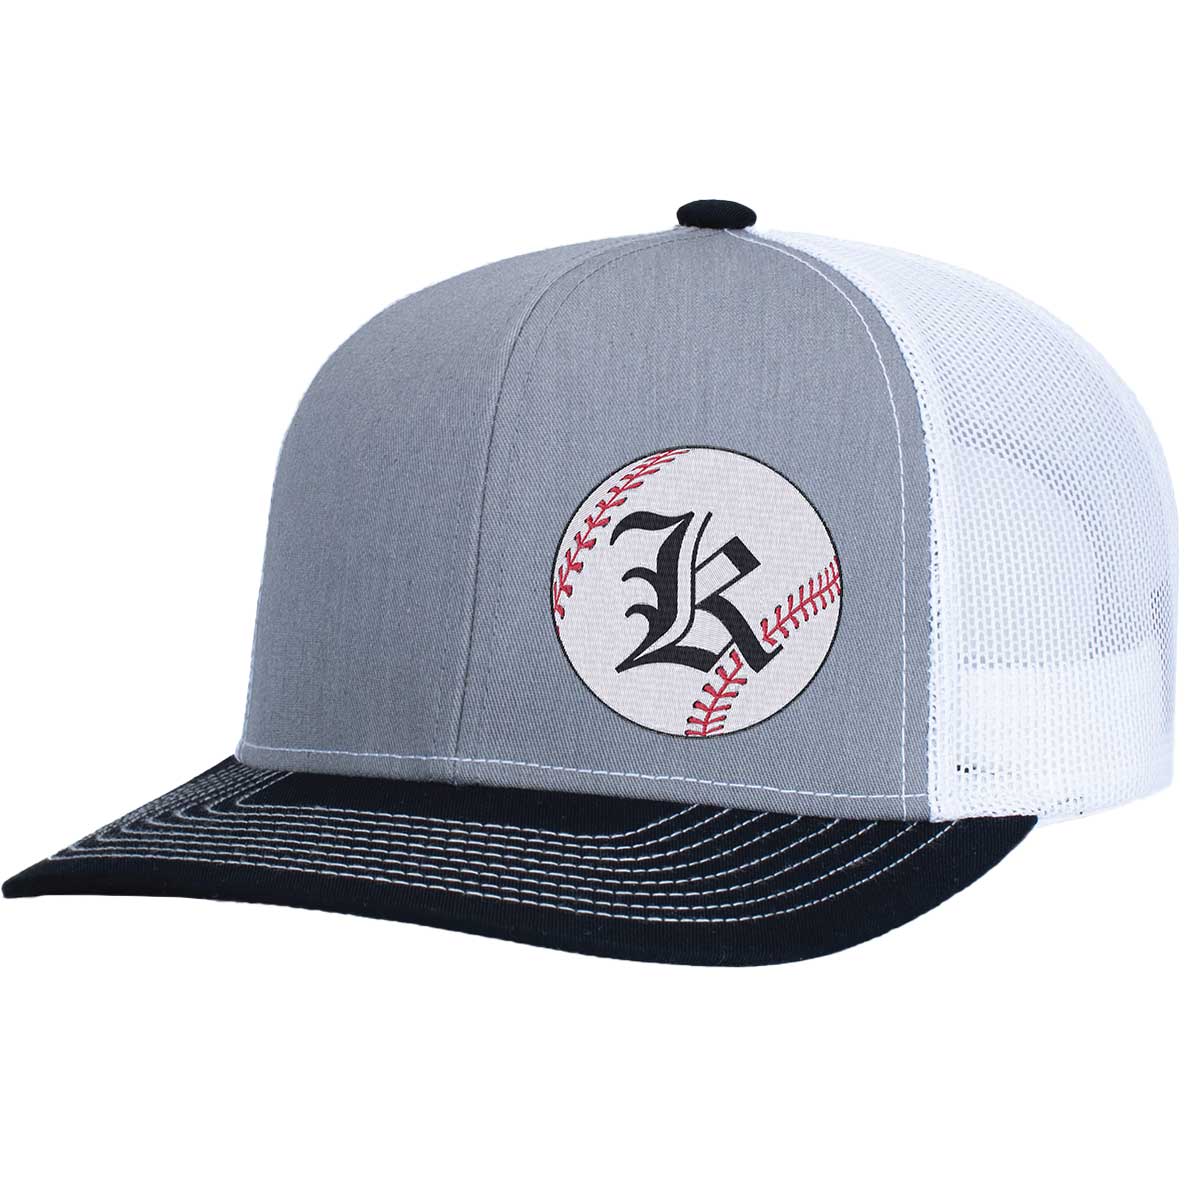 OMHS Knights Baseball Snapback Hat